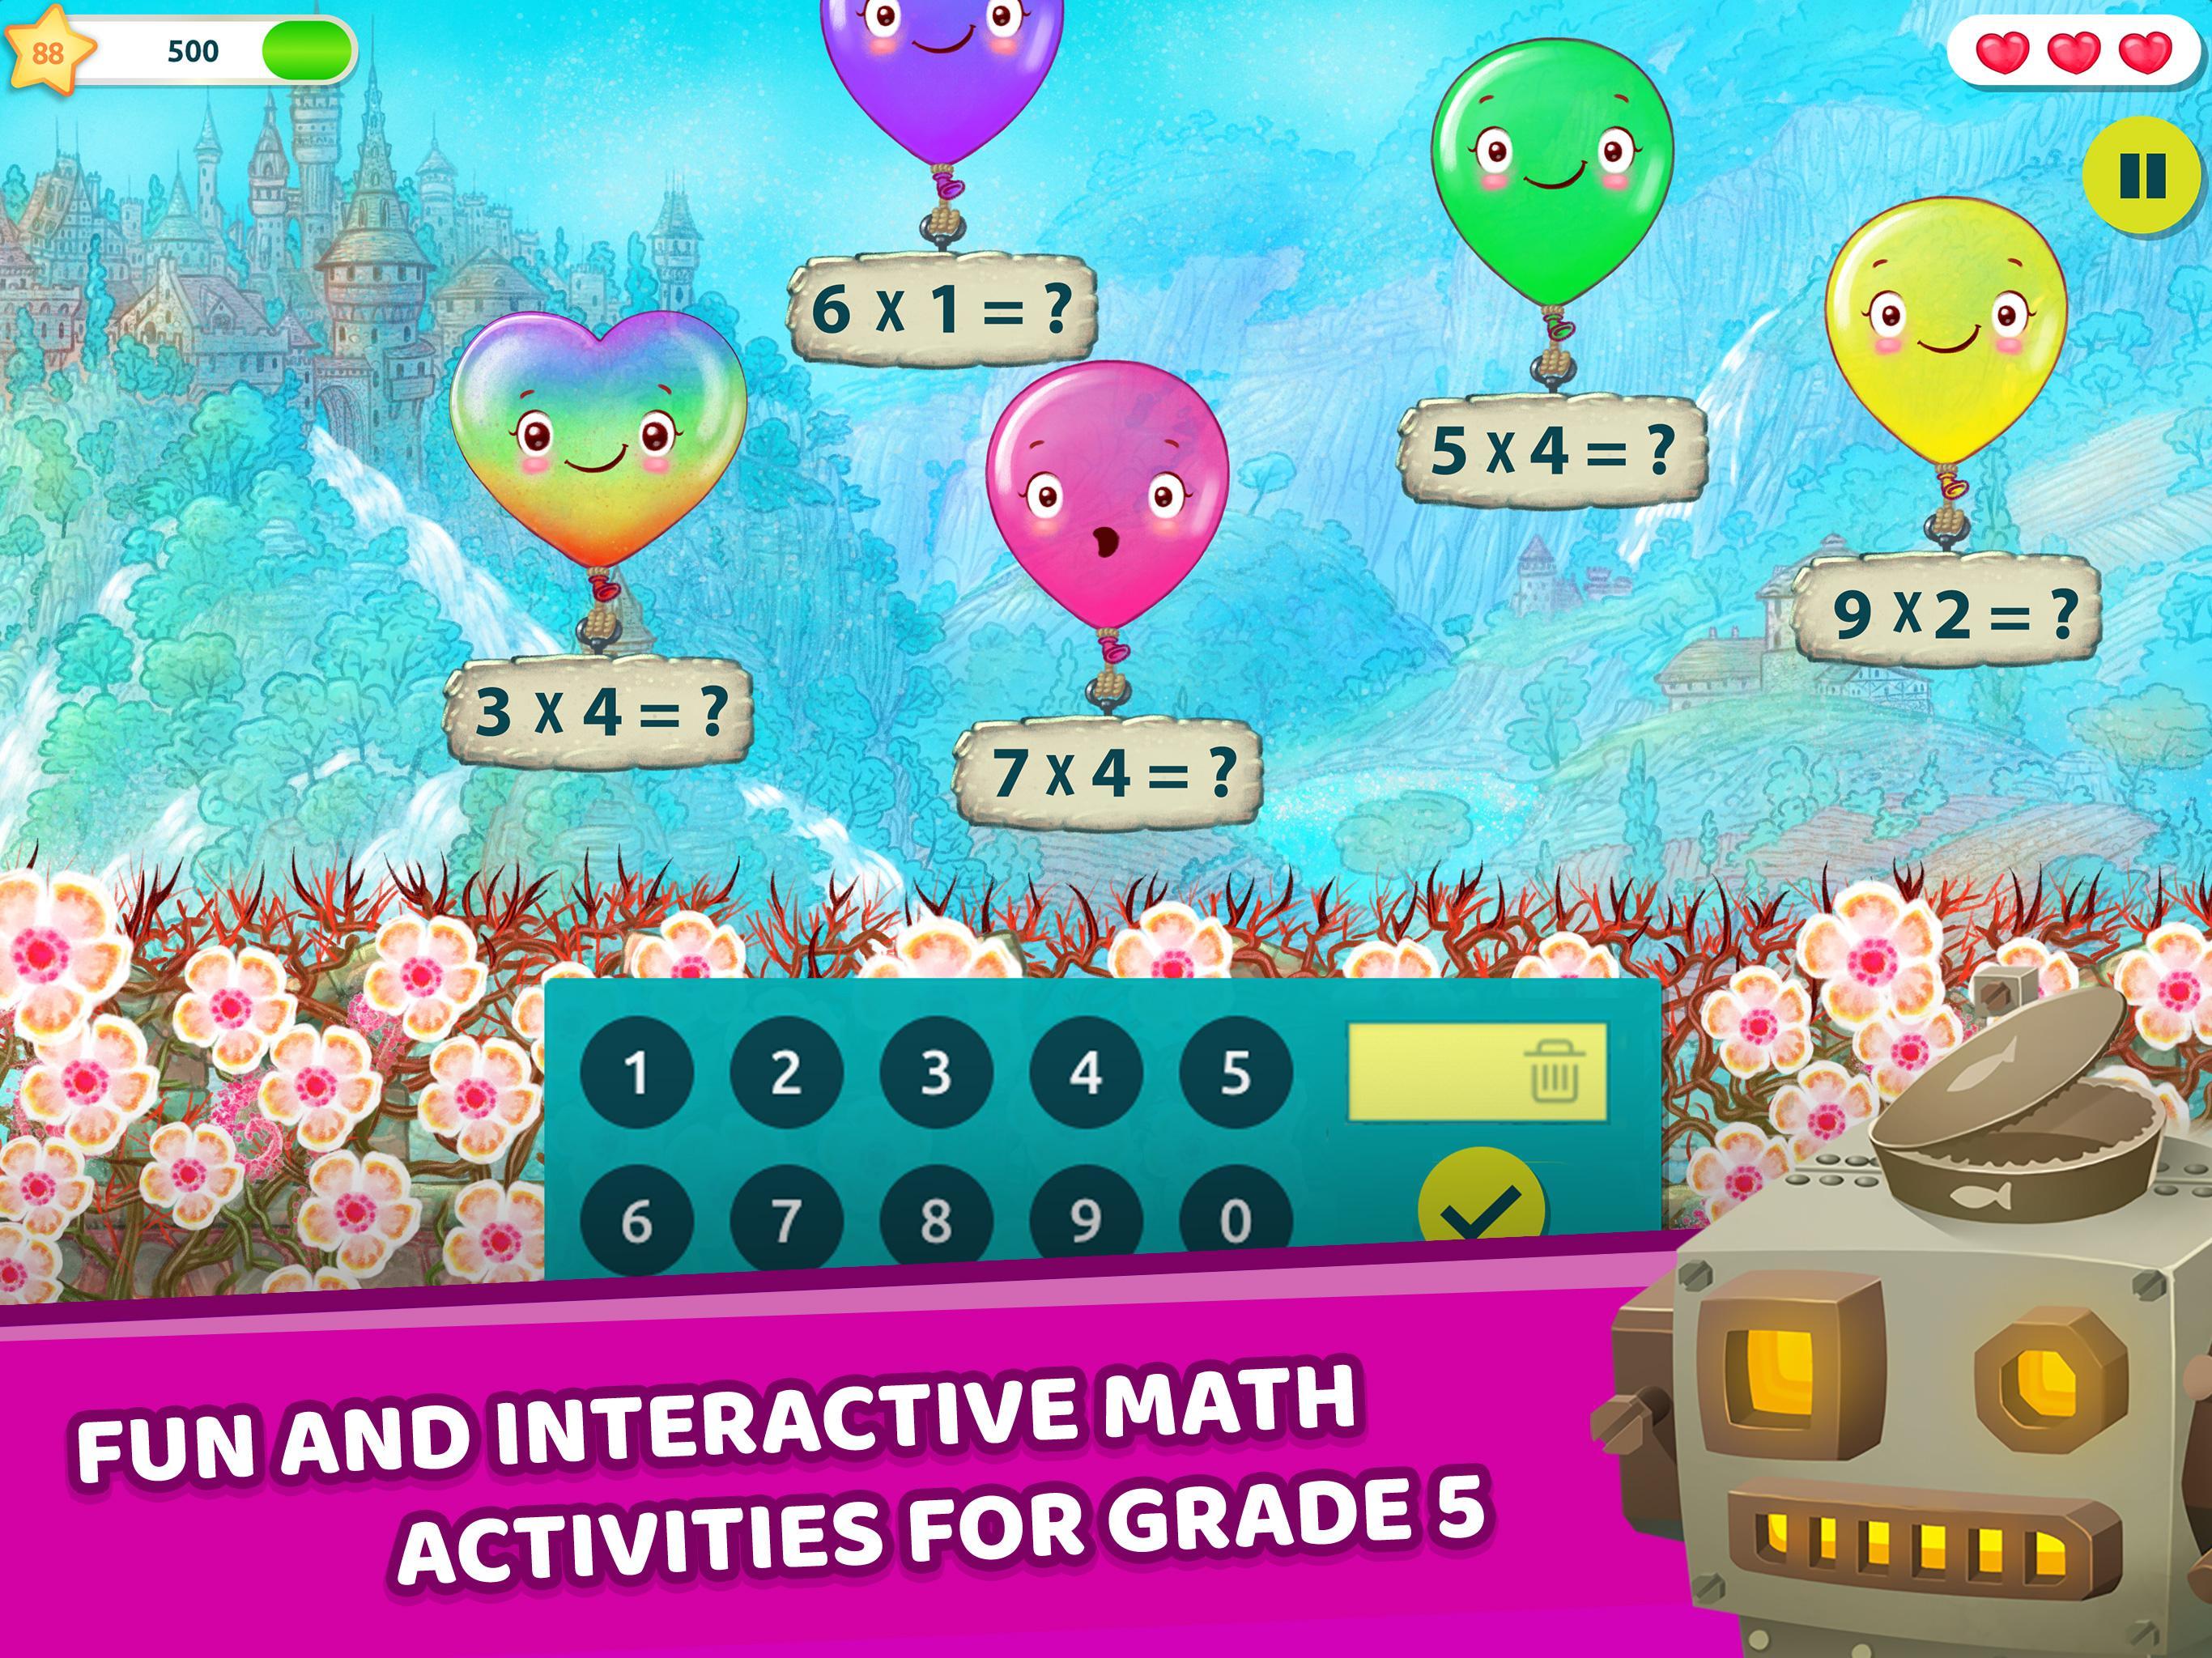 Matific Galaxy - Maths Games for 5th Graders 2.2.2 Screenshot 9